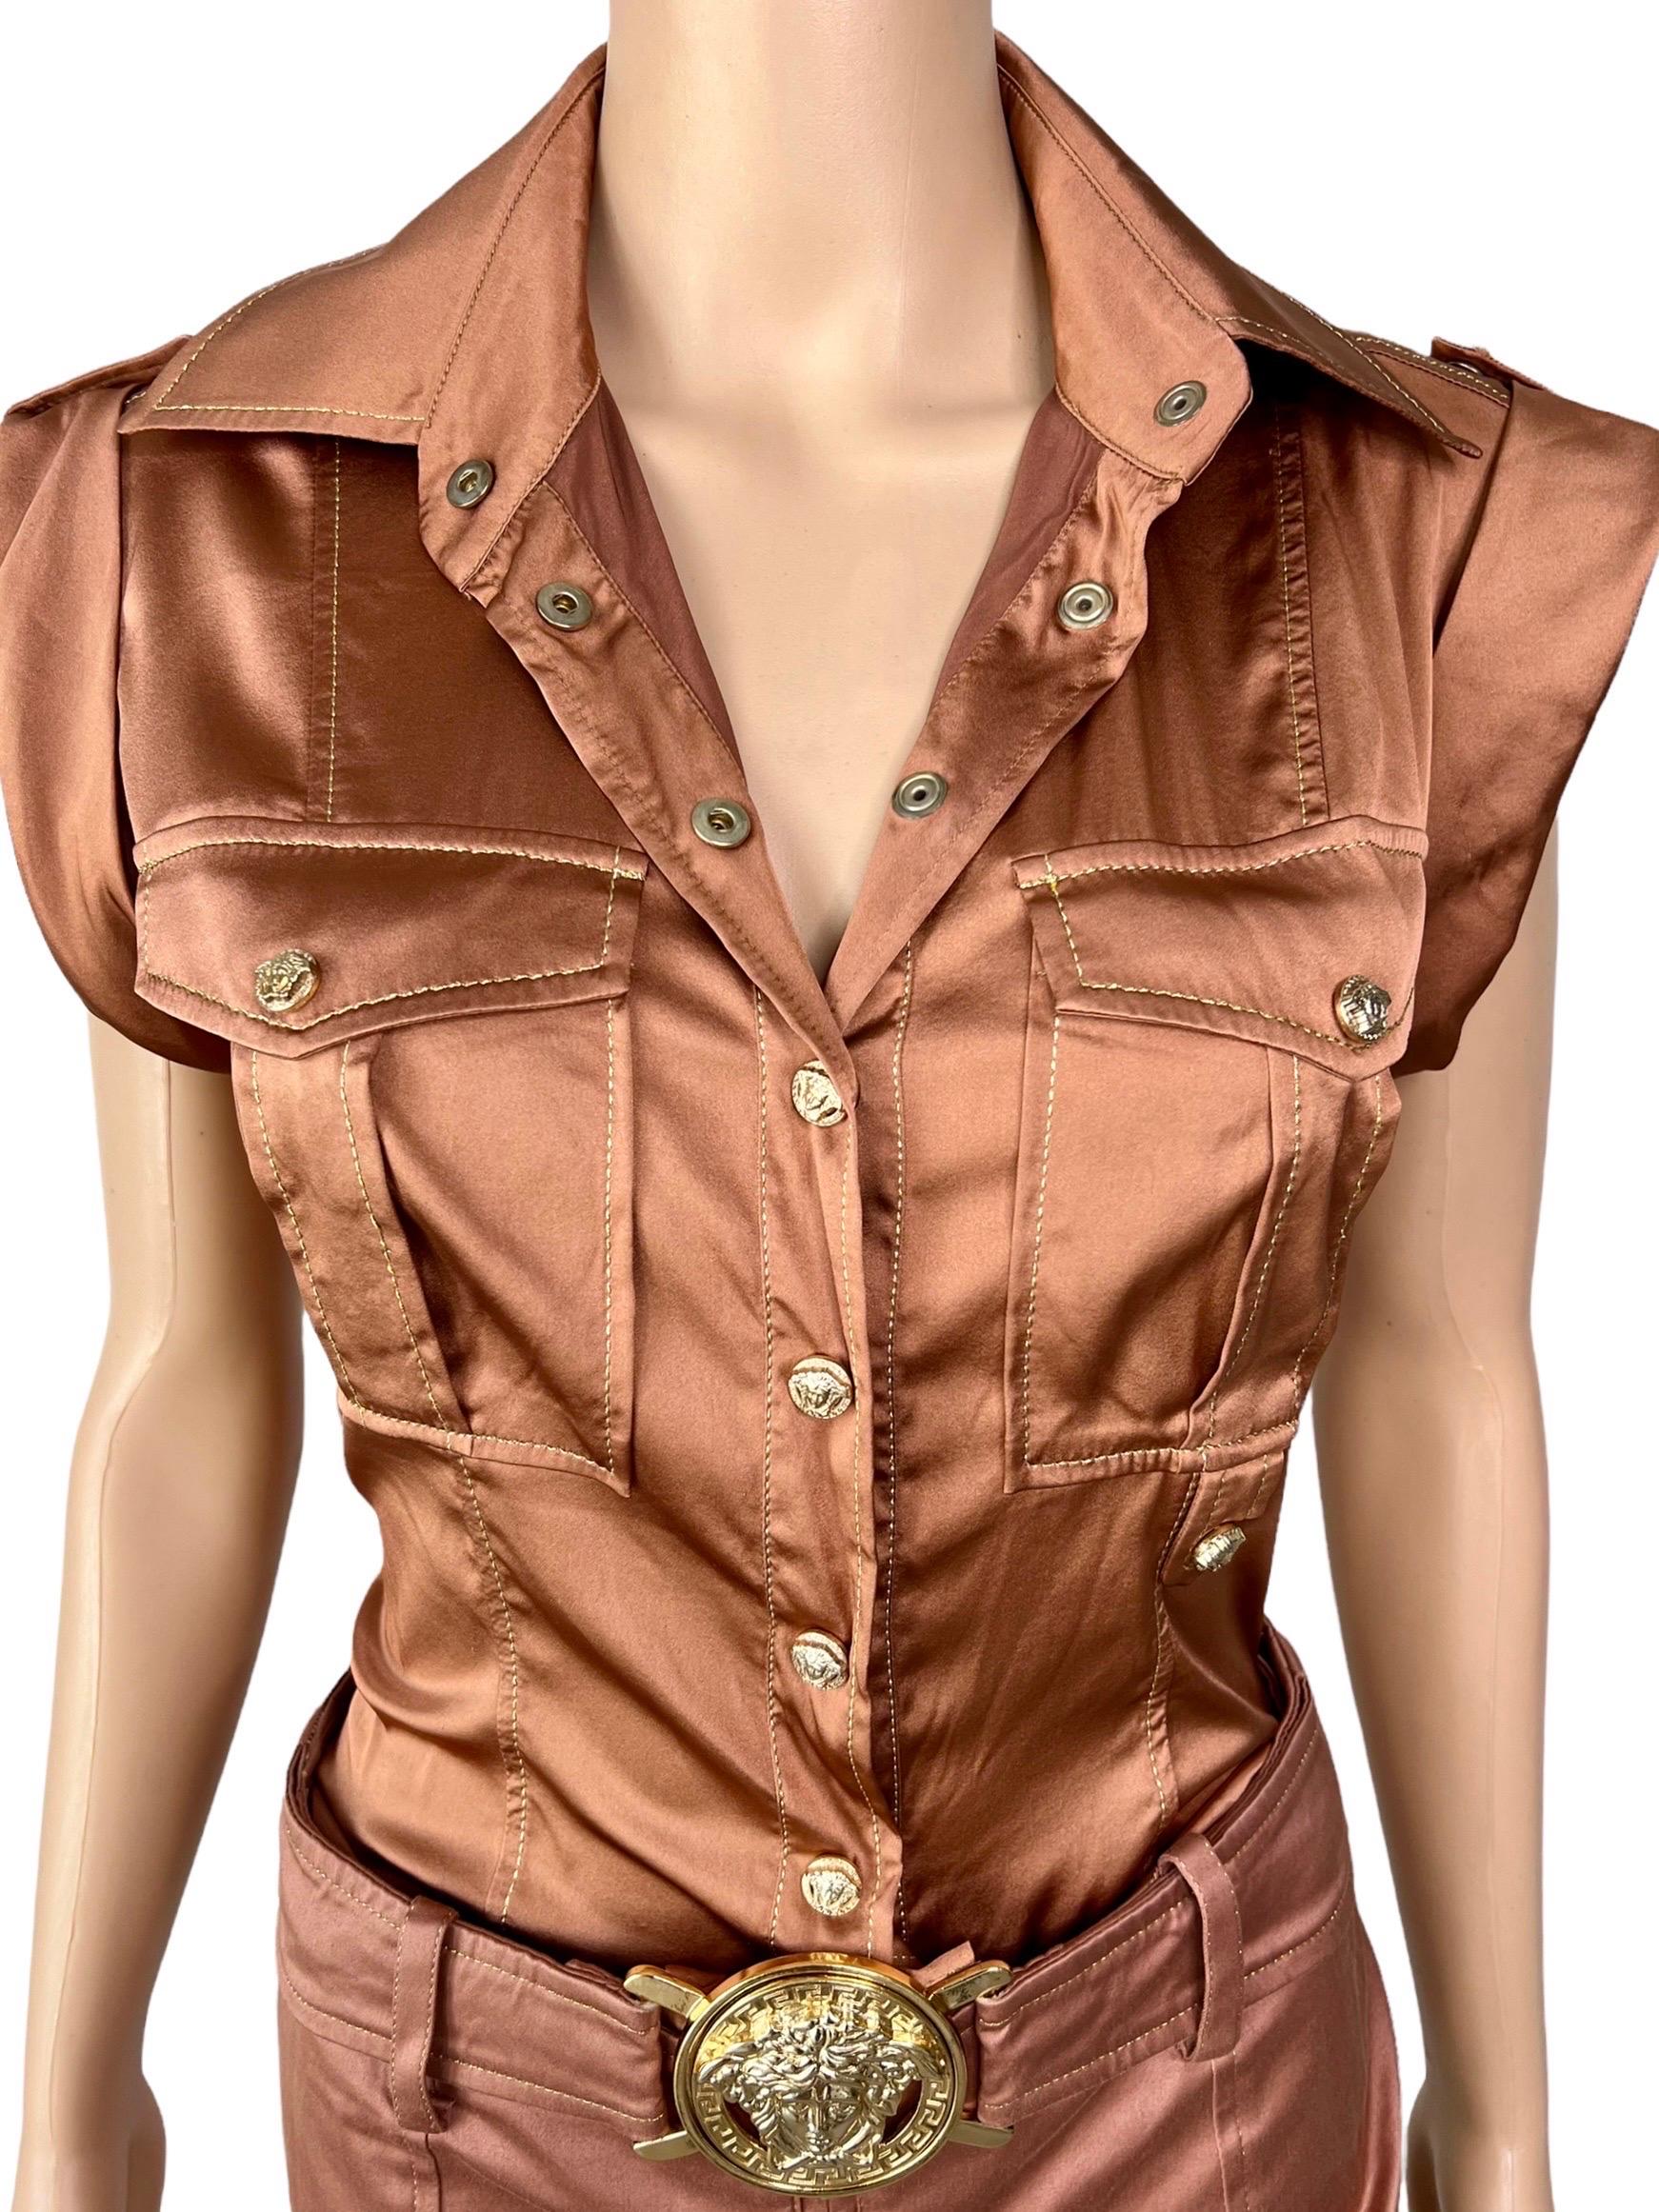 Versace S/S 2005 Runway Blouse Shirt Top & Medusa Logo Belted Pants 2 Piece Set For Sale 1